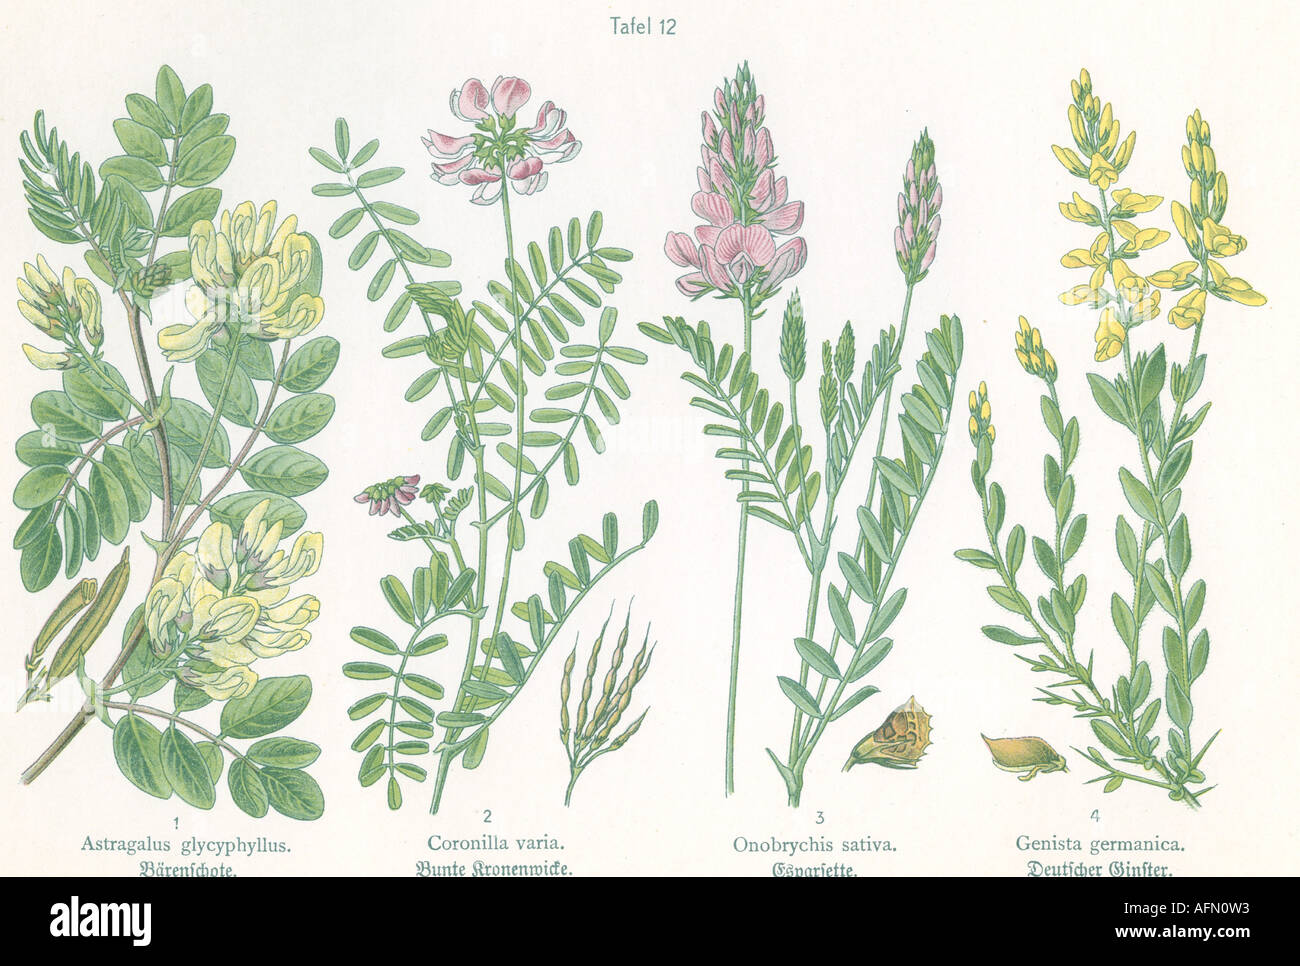 botany, four illustrations, Milk vetch (Astragalus glycyphyllus), Crown vetch (Coronilla varia), Sainfoin (Onobrychis sativa), German Greenweed (Genista germanica), circa 1914, Stock Photo